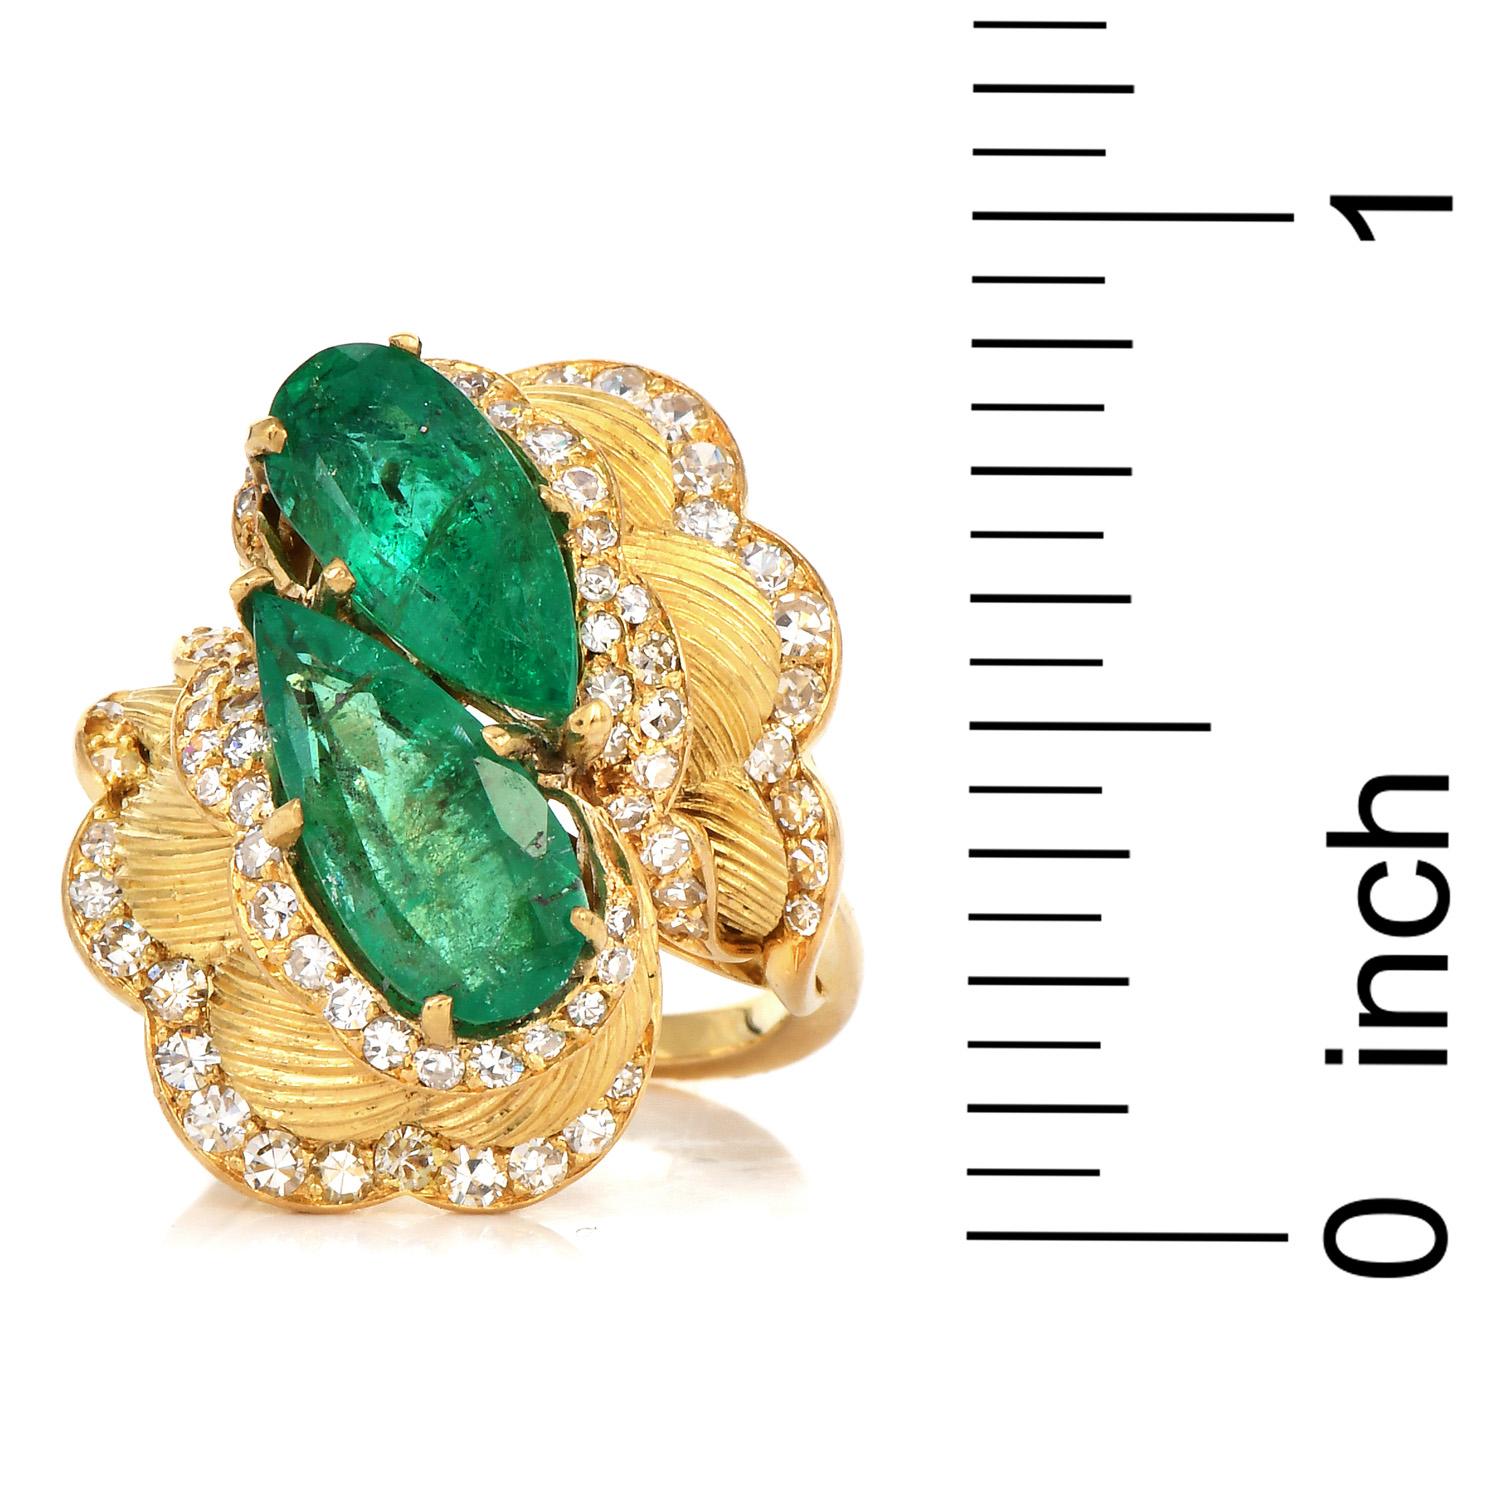 Diamond Emerald 18K Yellow Gold Bypass Textured Flower Cocktail Ring 2